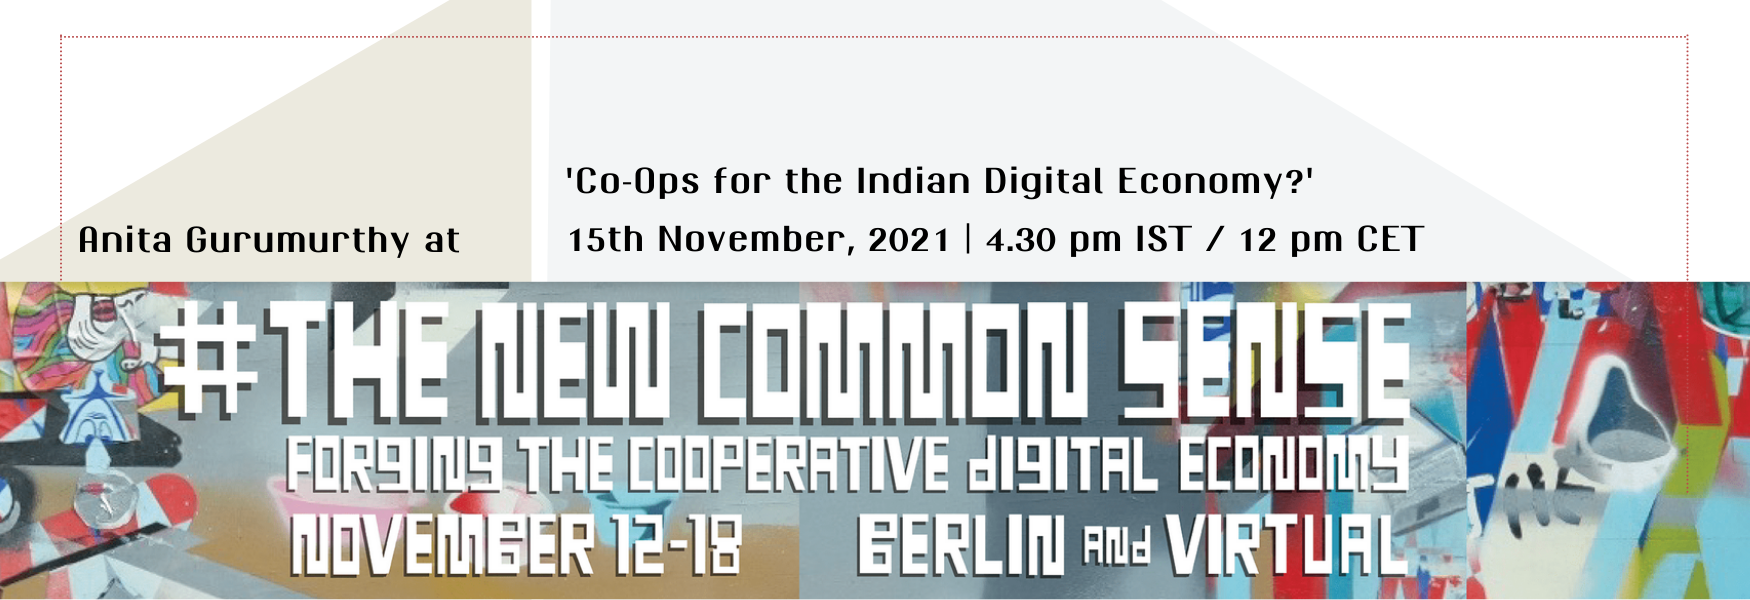 Conference of the Platform Cooperativism Consortium ITfC banner